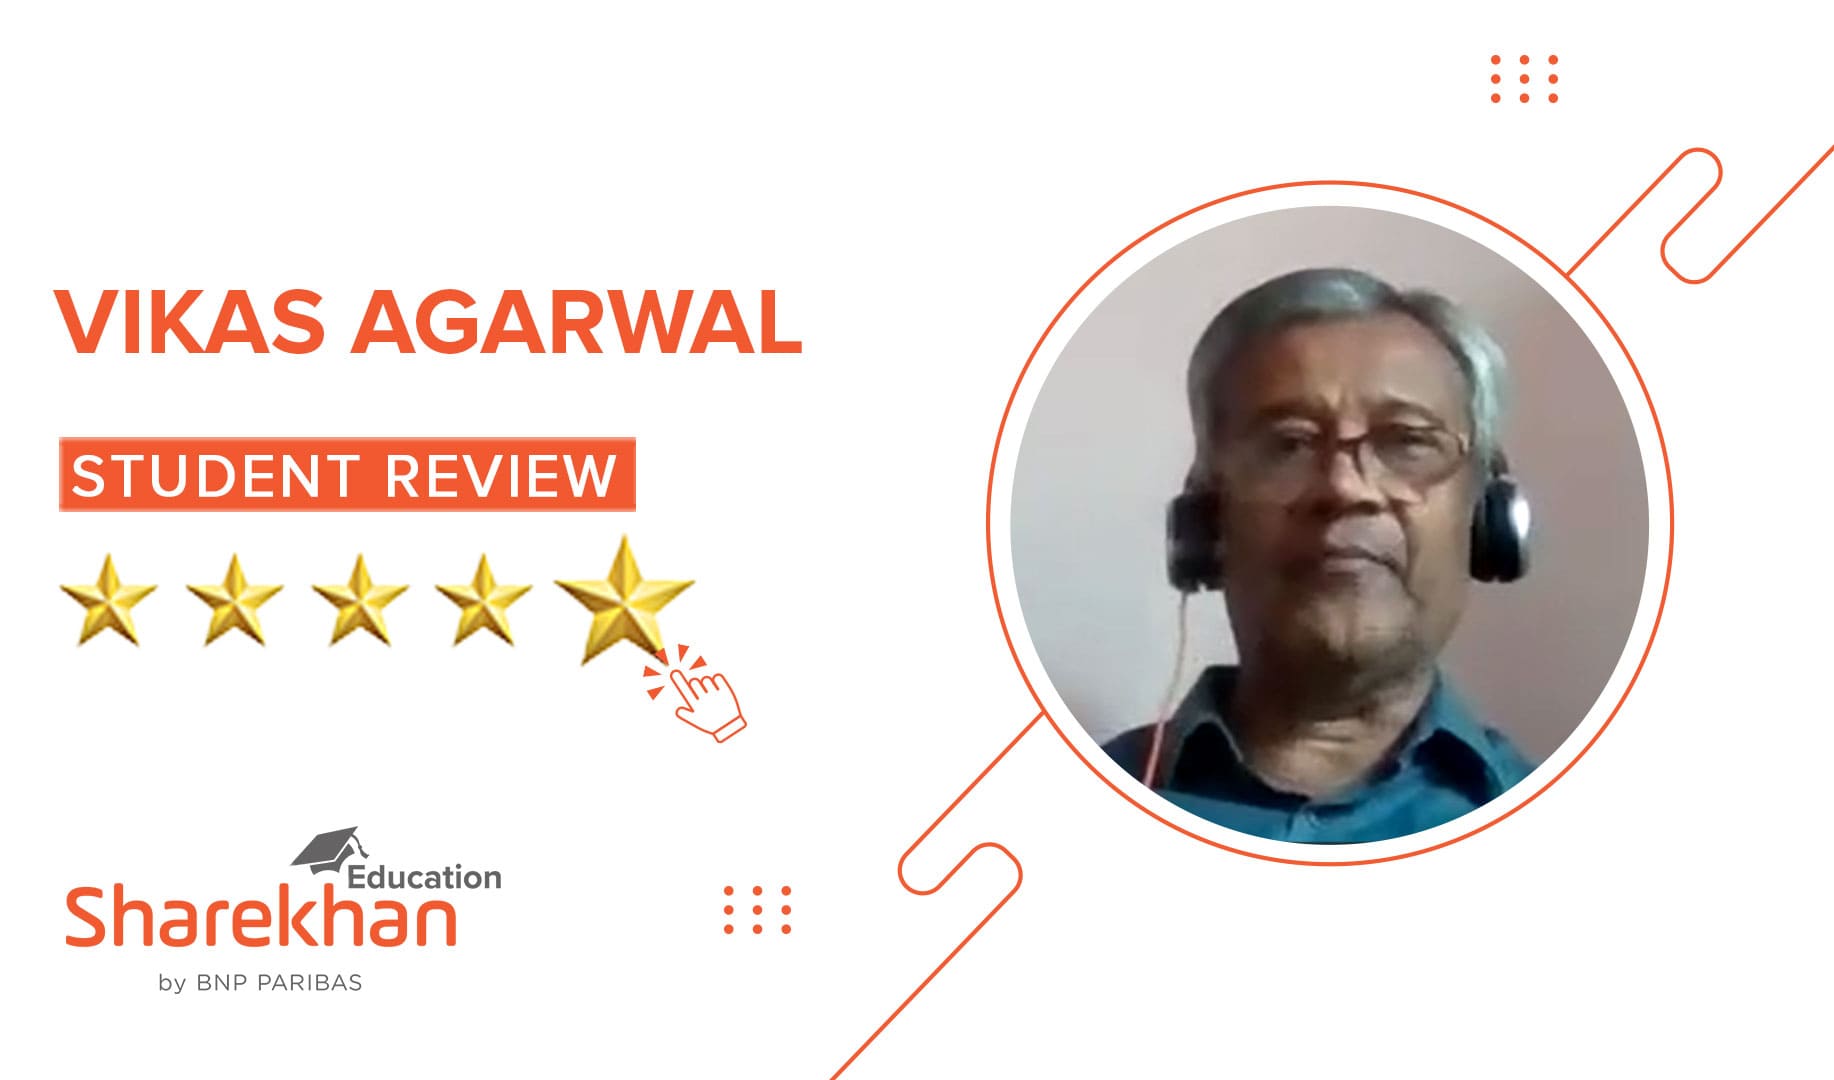 Sharekhan Education Review by Vikas Agarwal